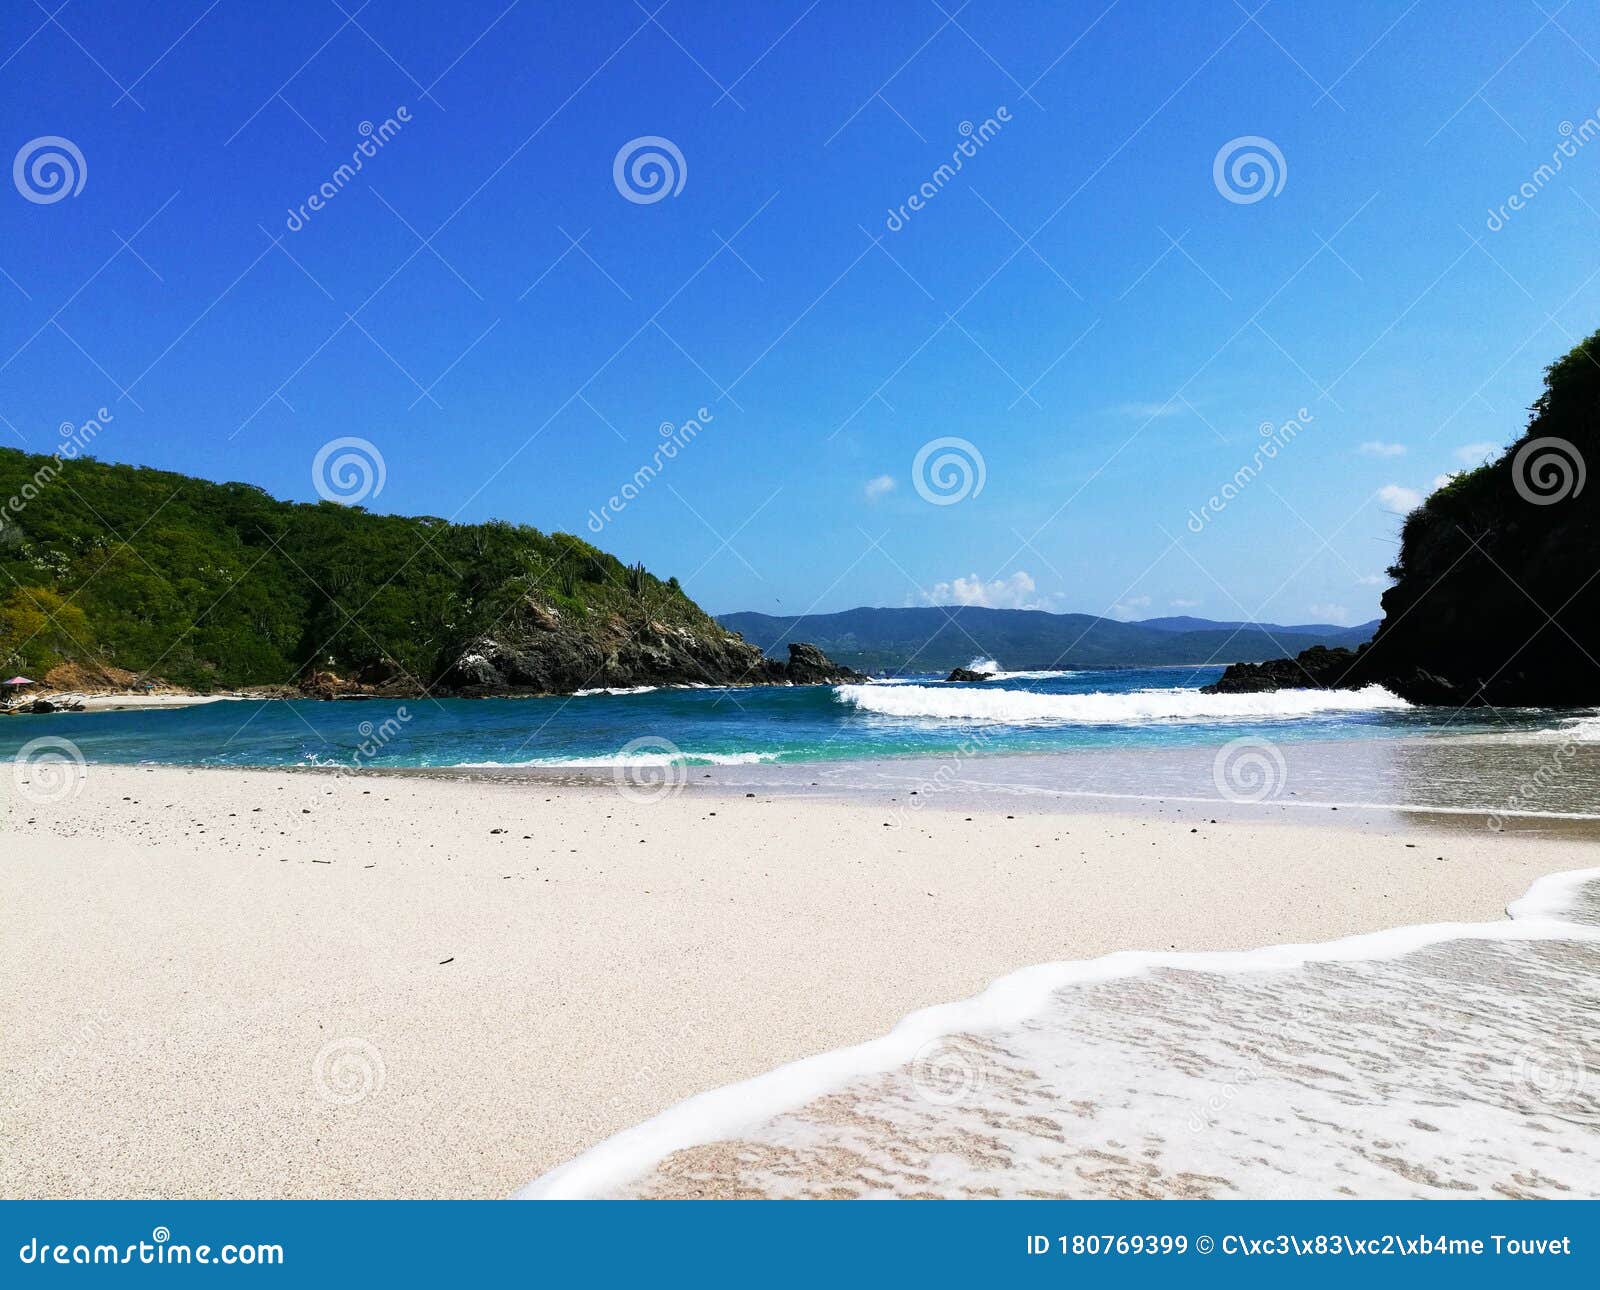 cocinas island white sand paradisiacal beach